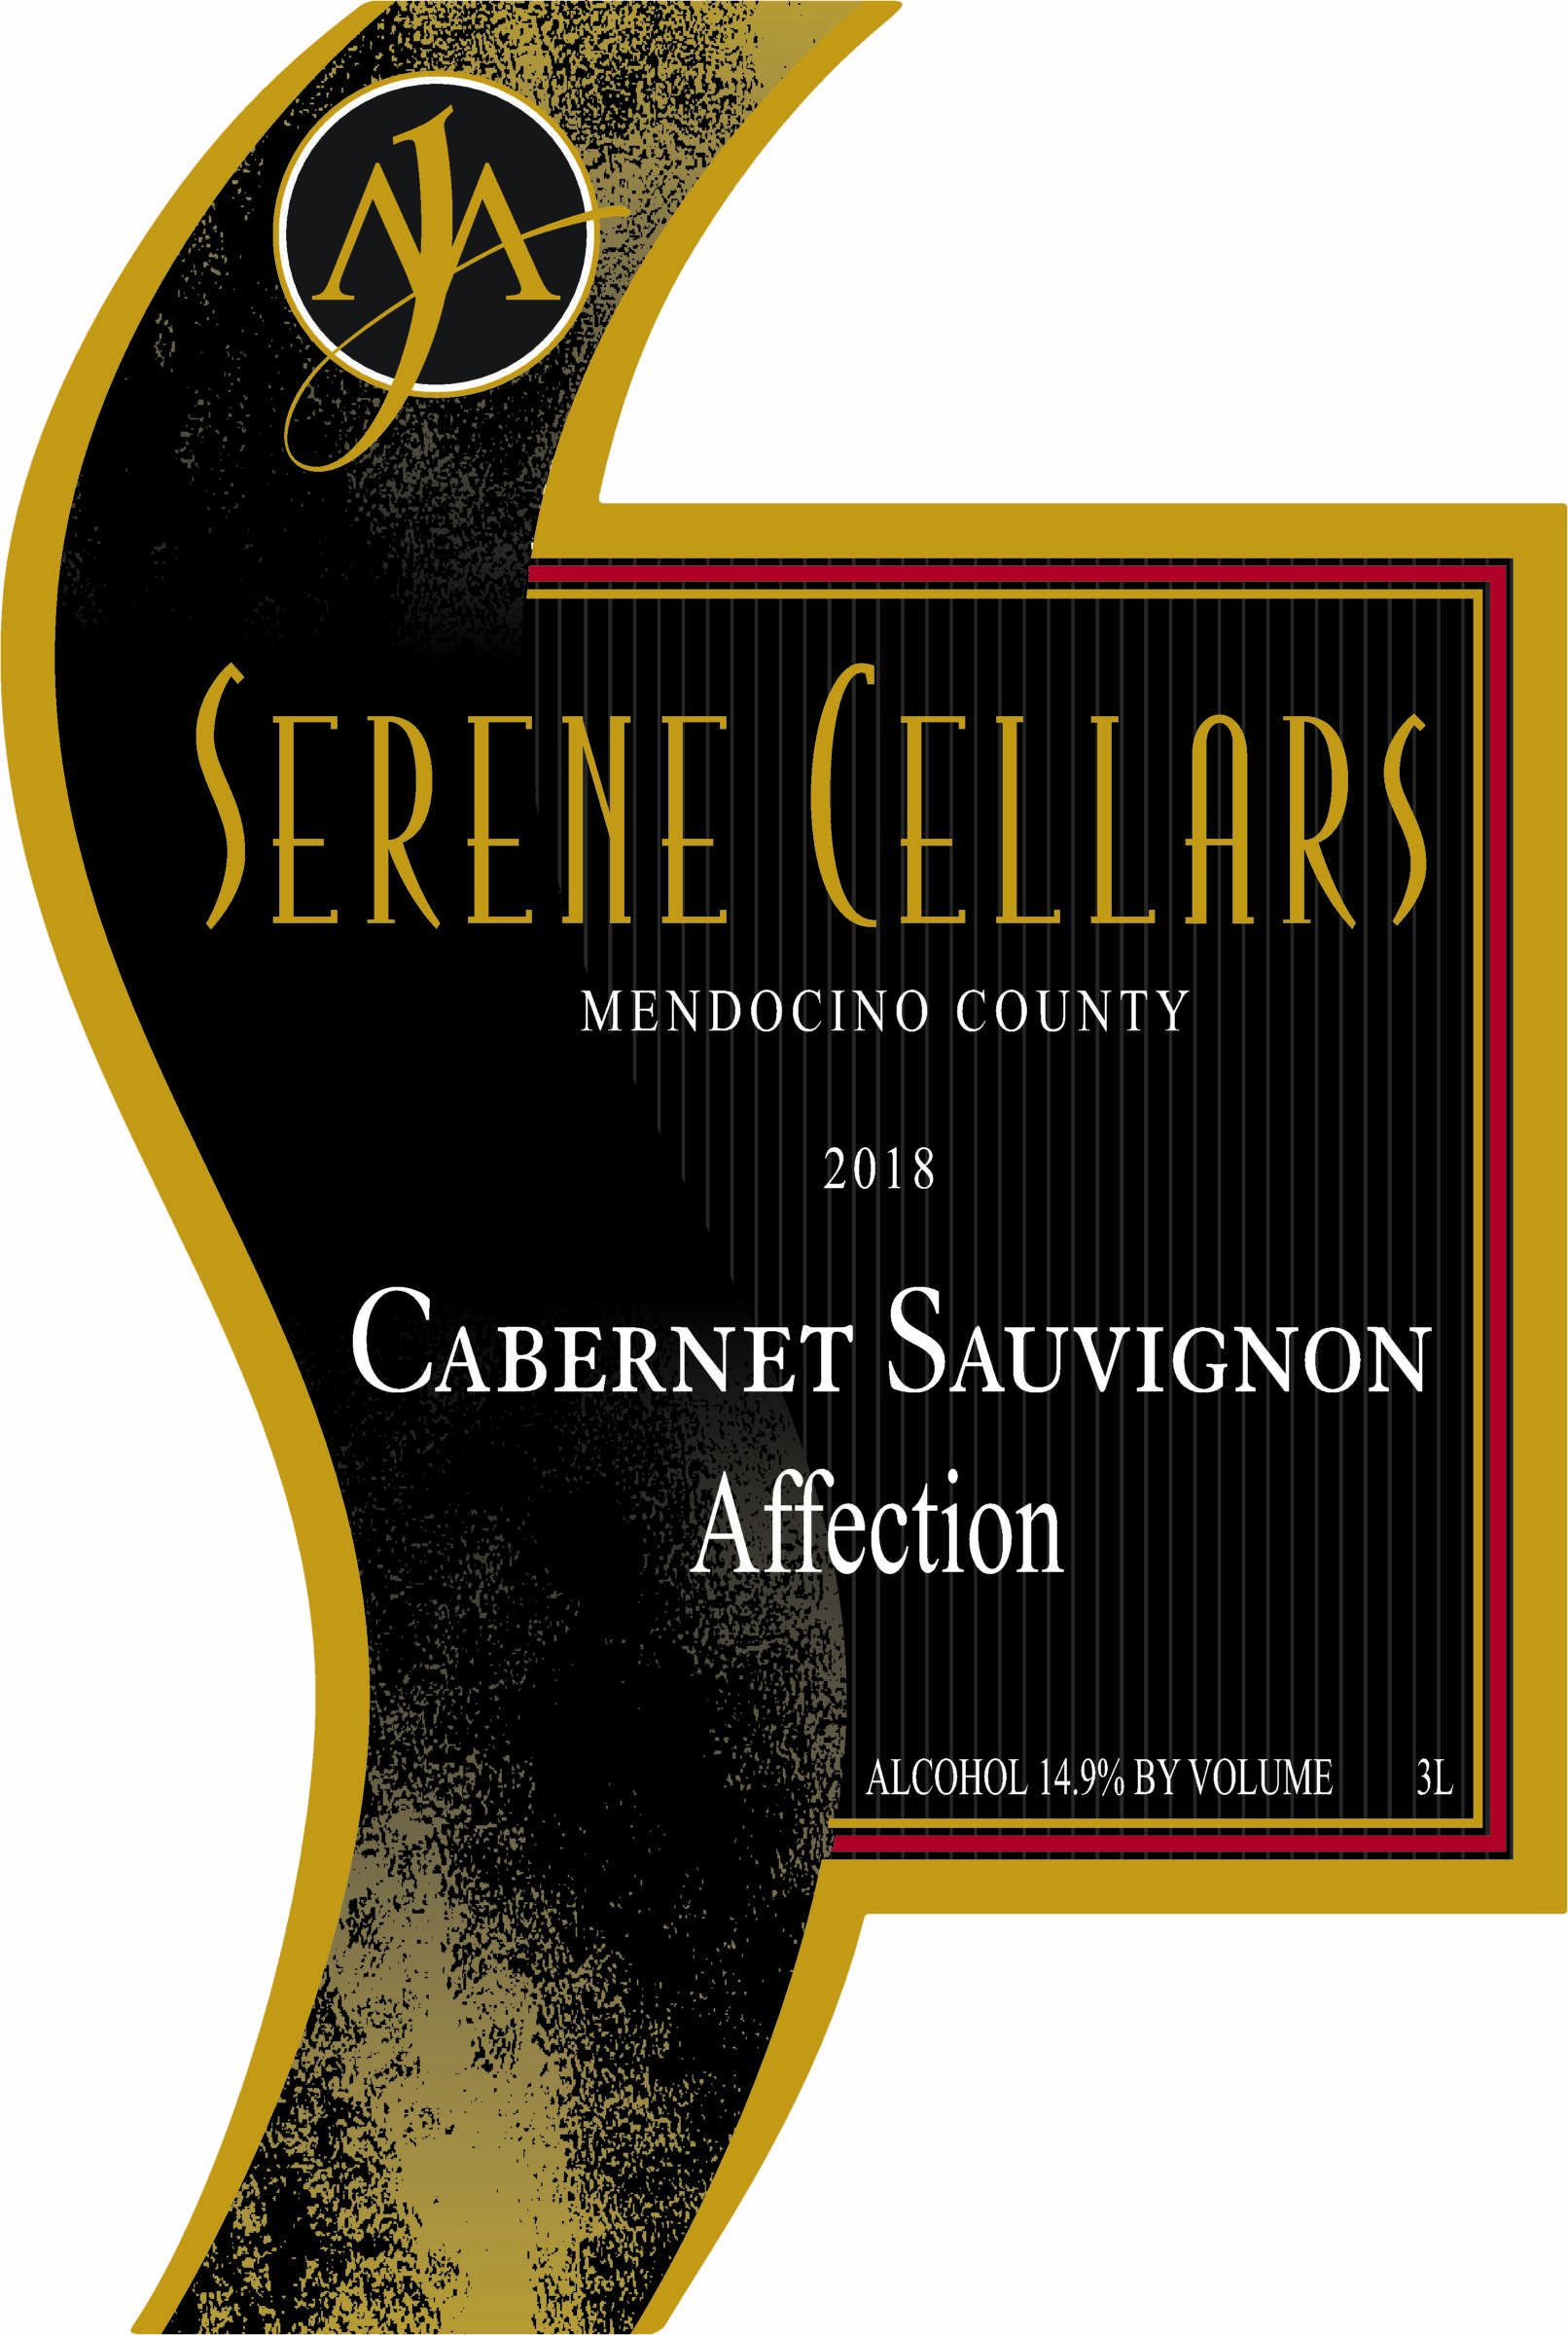 Product Image for 2018 Mendocino County Cabernet Sauvignon "Affection" 3L